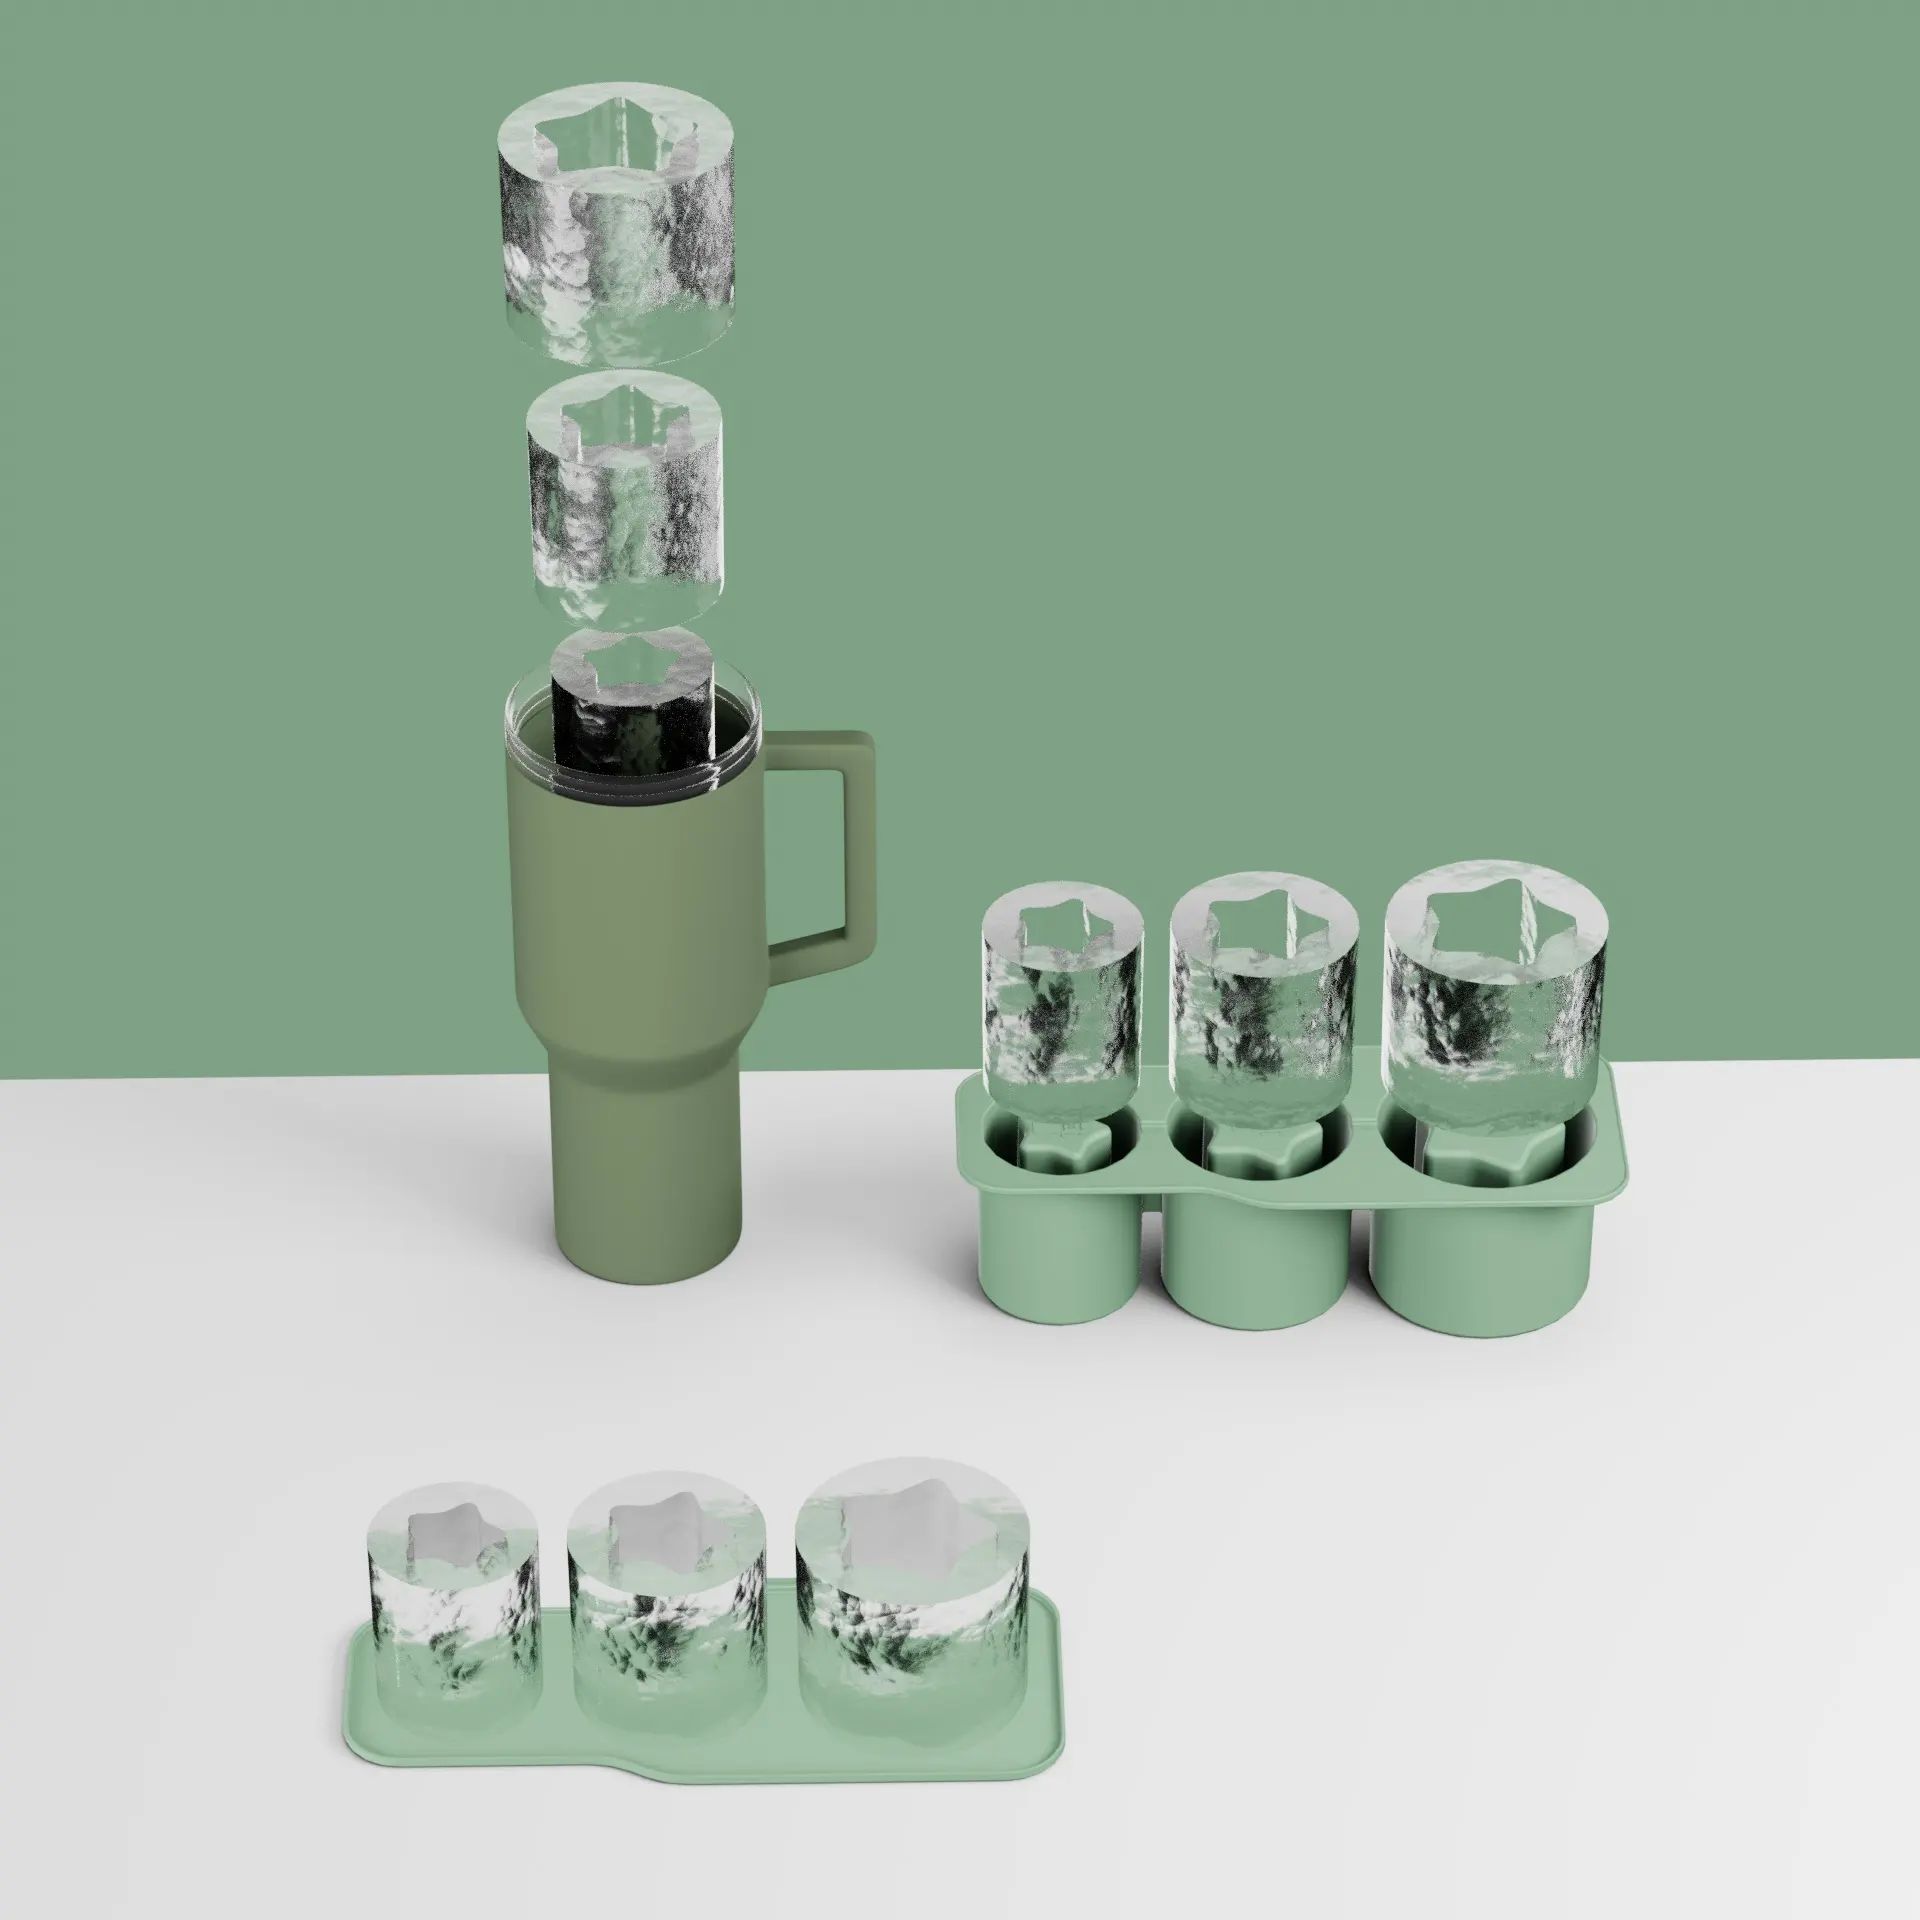 Nampan kubus silikon kelas makanan dapat digunakan kembali dengan tutup cetakan khusus untuk membuat 3 es batu silinder berongga mudah dan ramah lingkungan